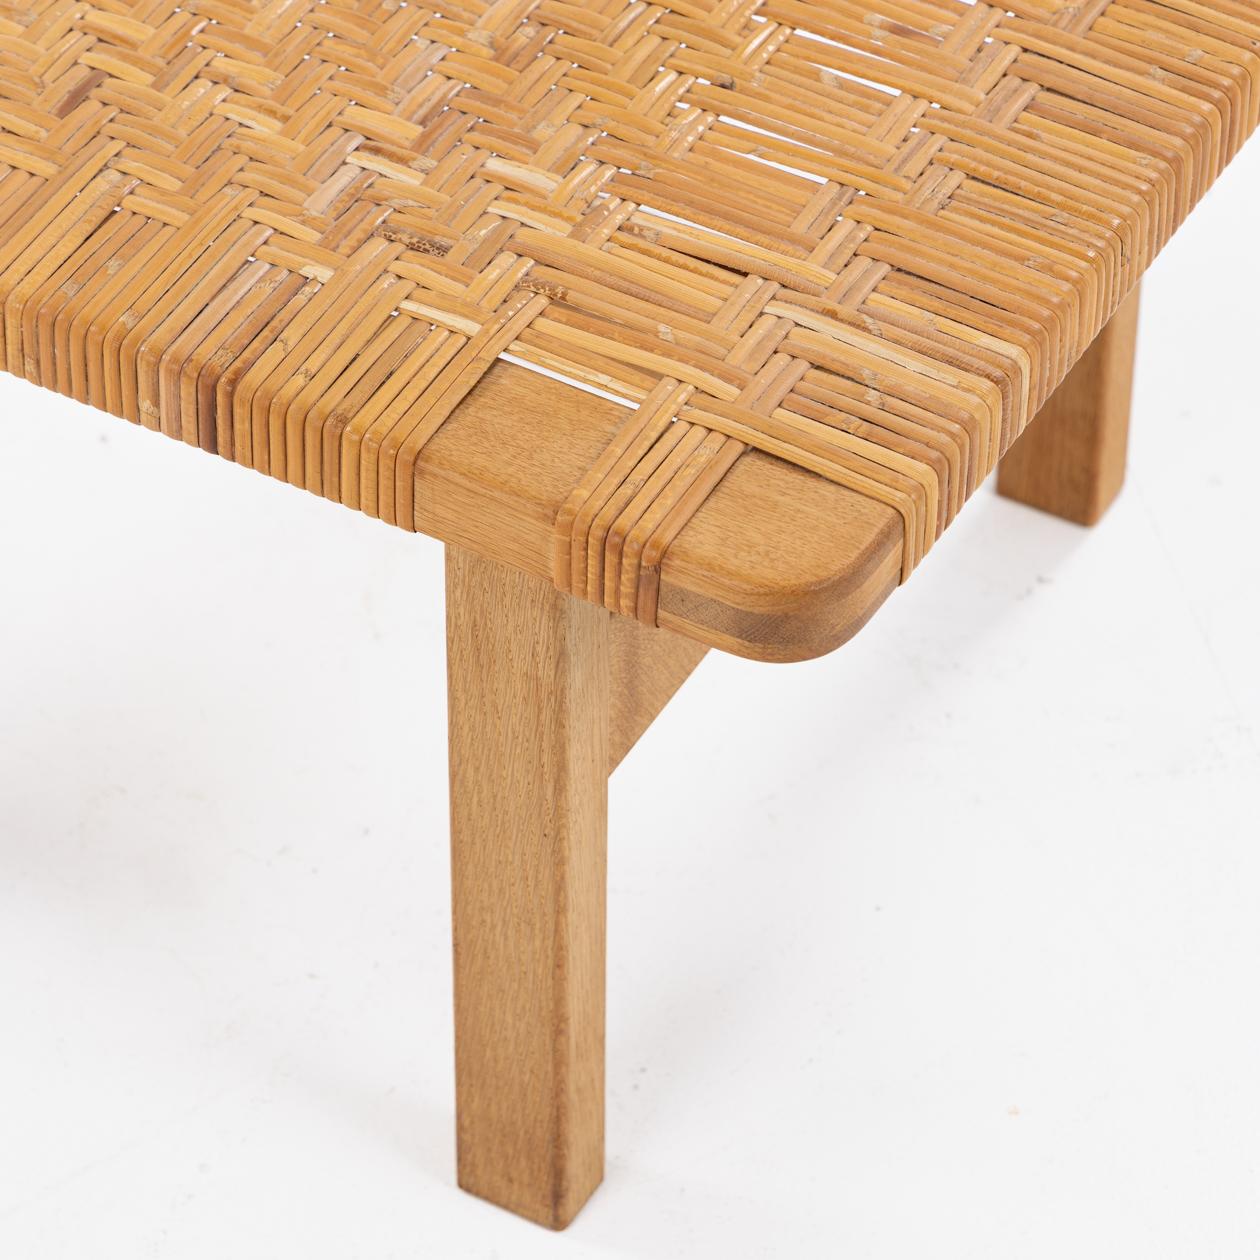 BM 5273 - Small bench in oak and cane. Børge Mogensen / Fredericia Furniture